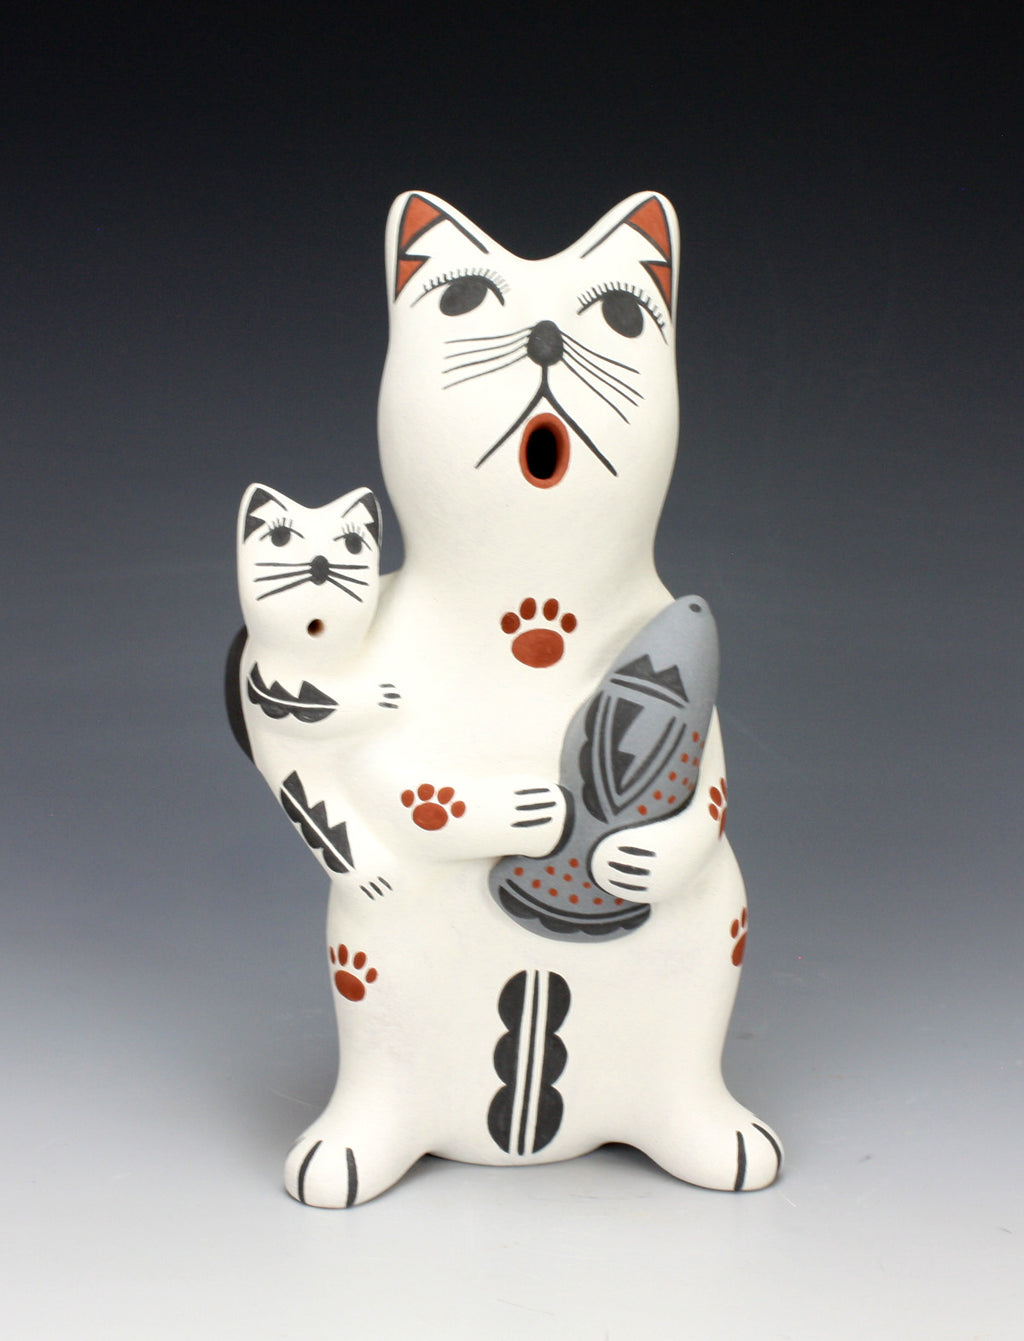 Jemez Pueblo American Indian Pottery Cat Storyteller #4 - Darrick Tsosie